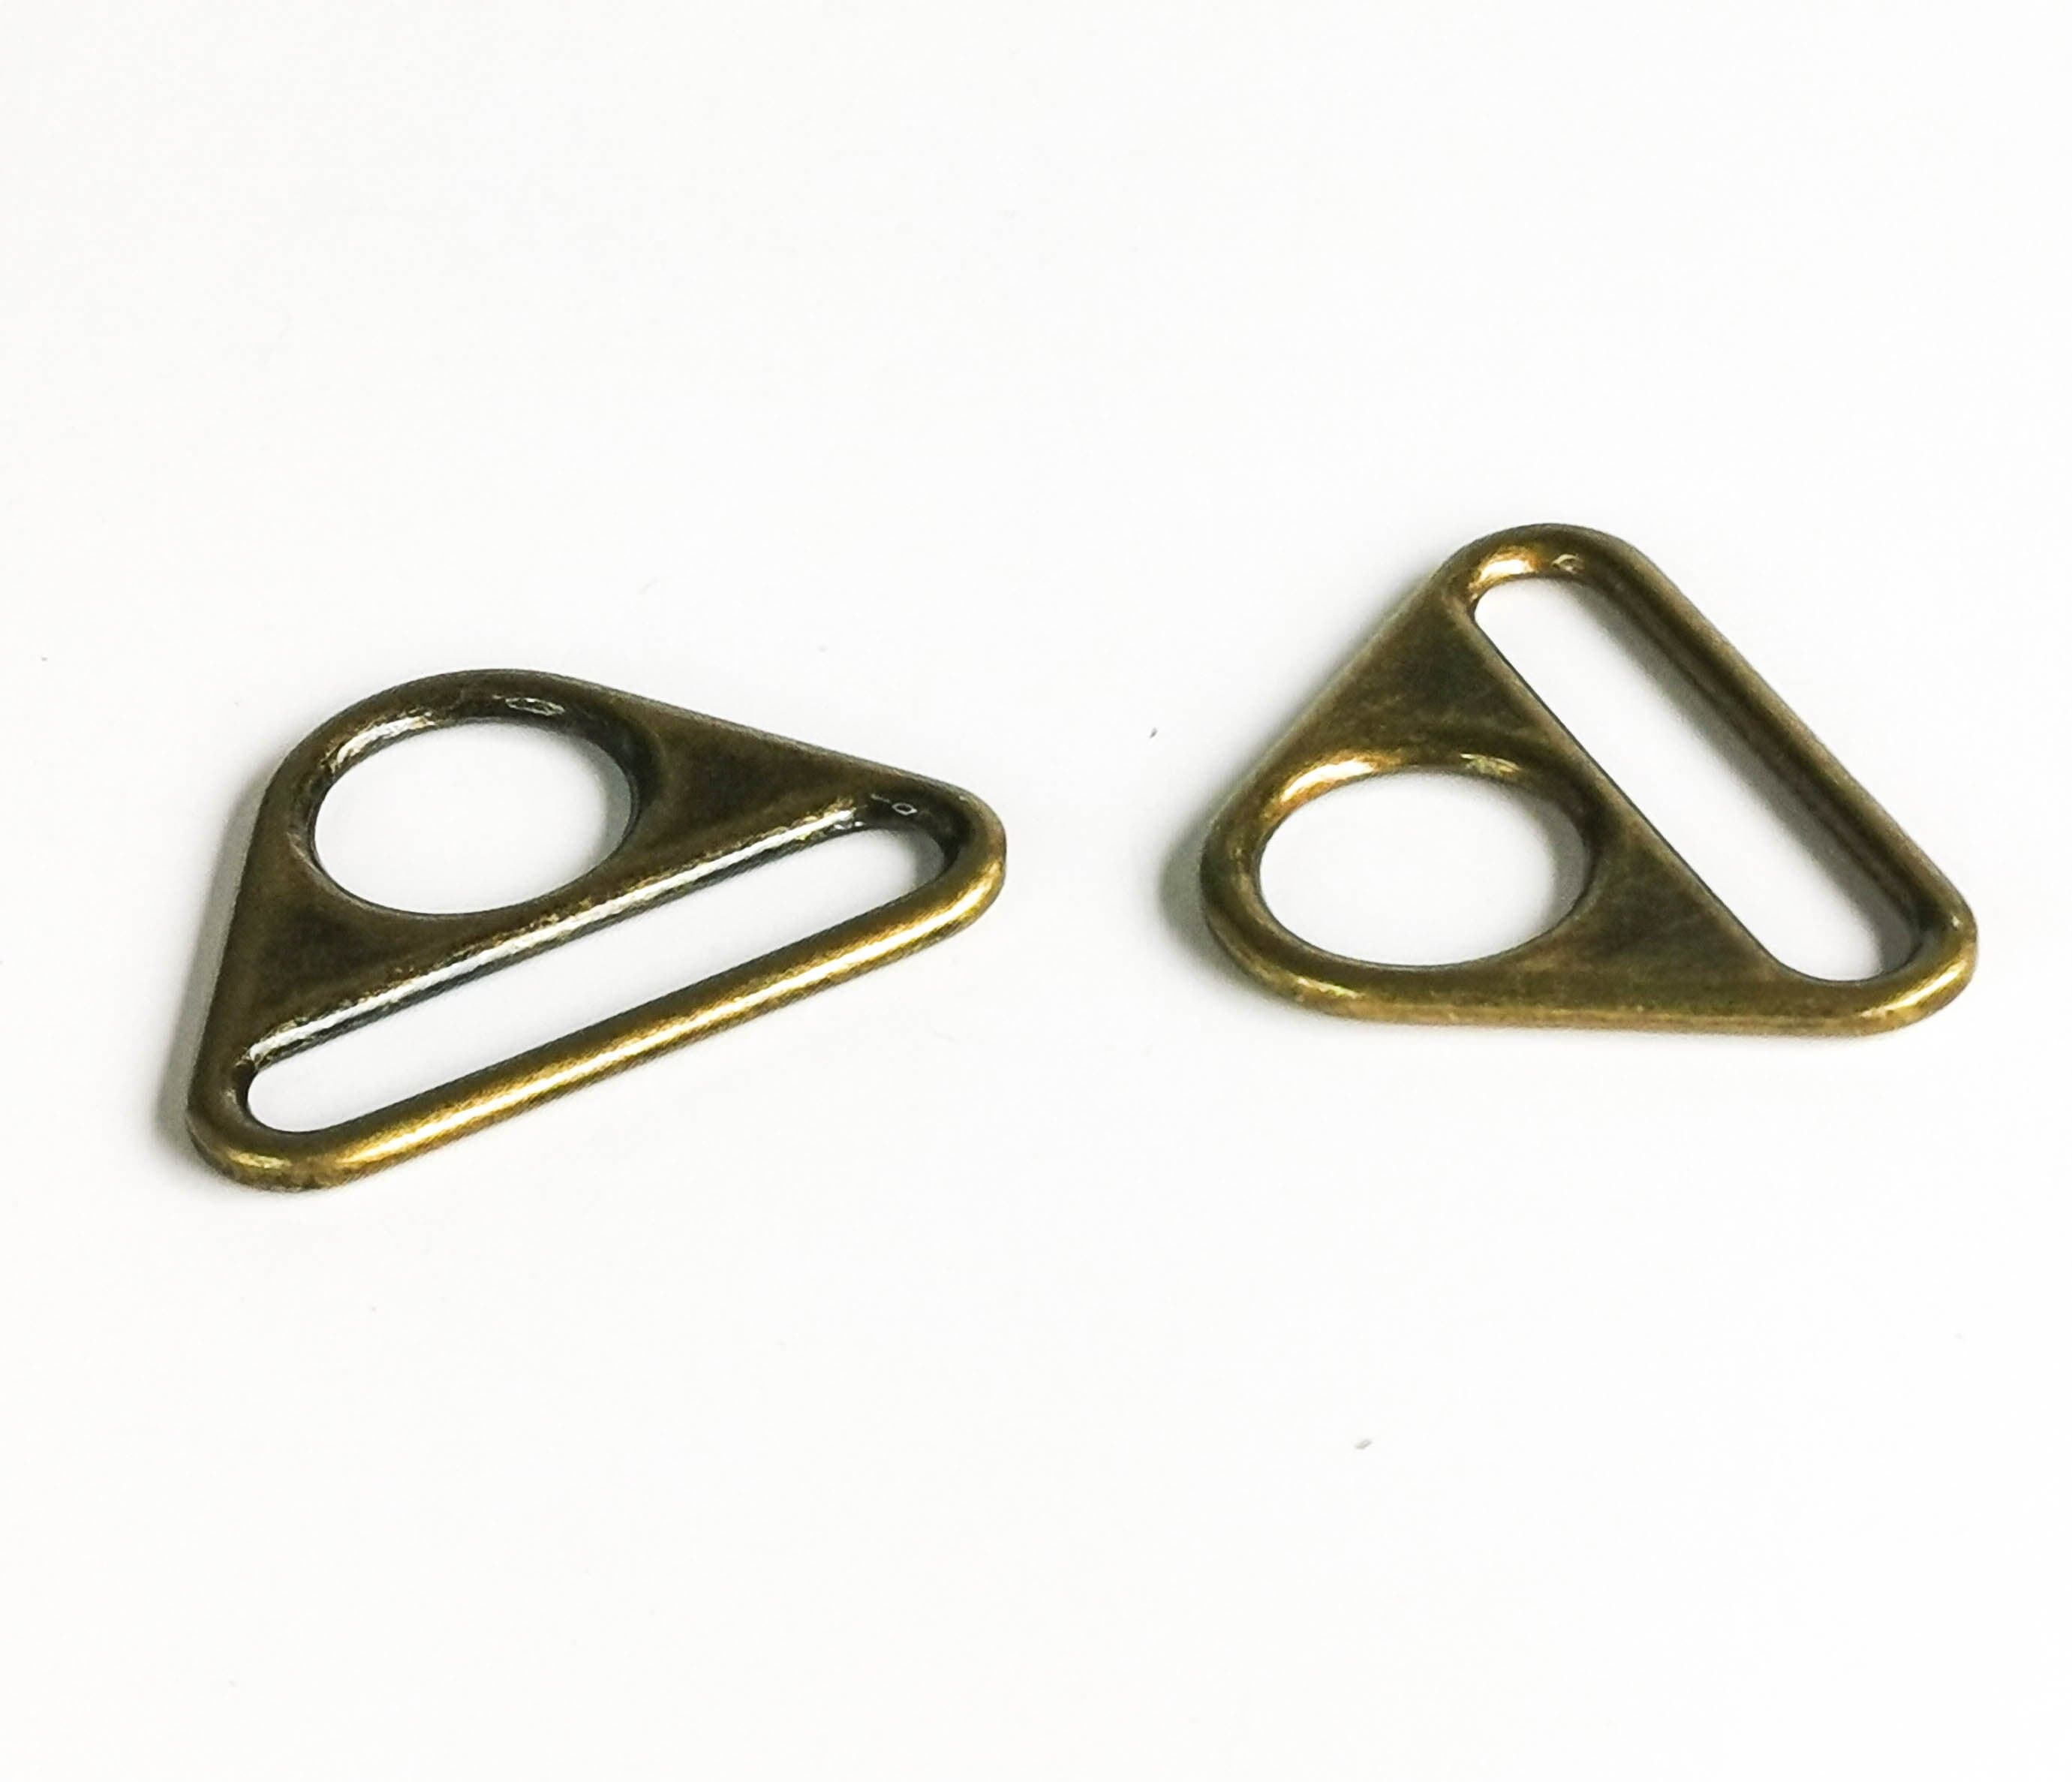 Triangle Rings 1 1/2" (38mm) by Emmaline Bags - Kiwi Bagineers